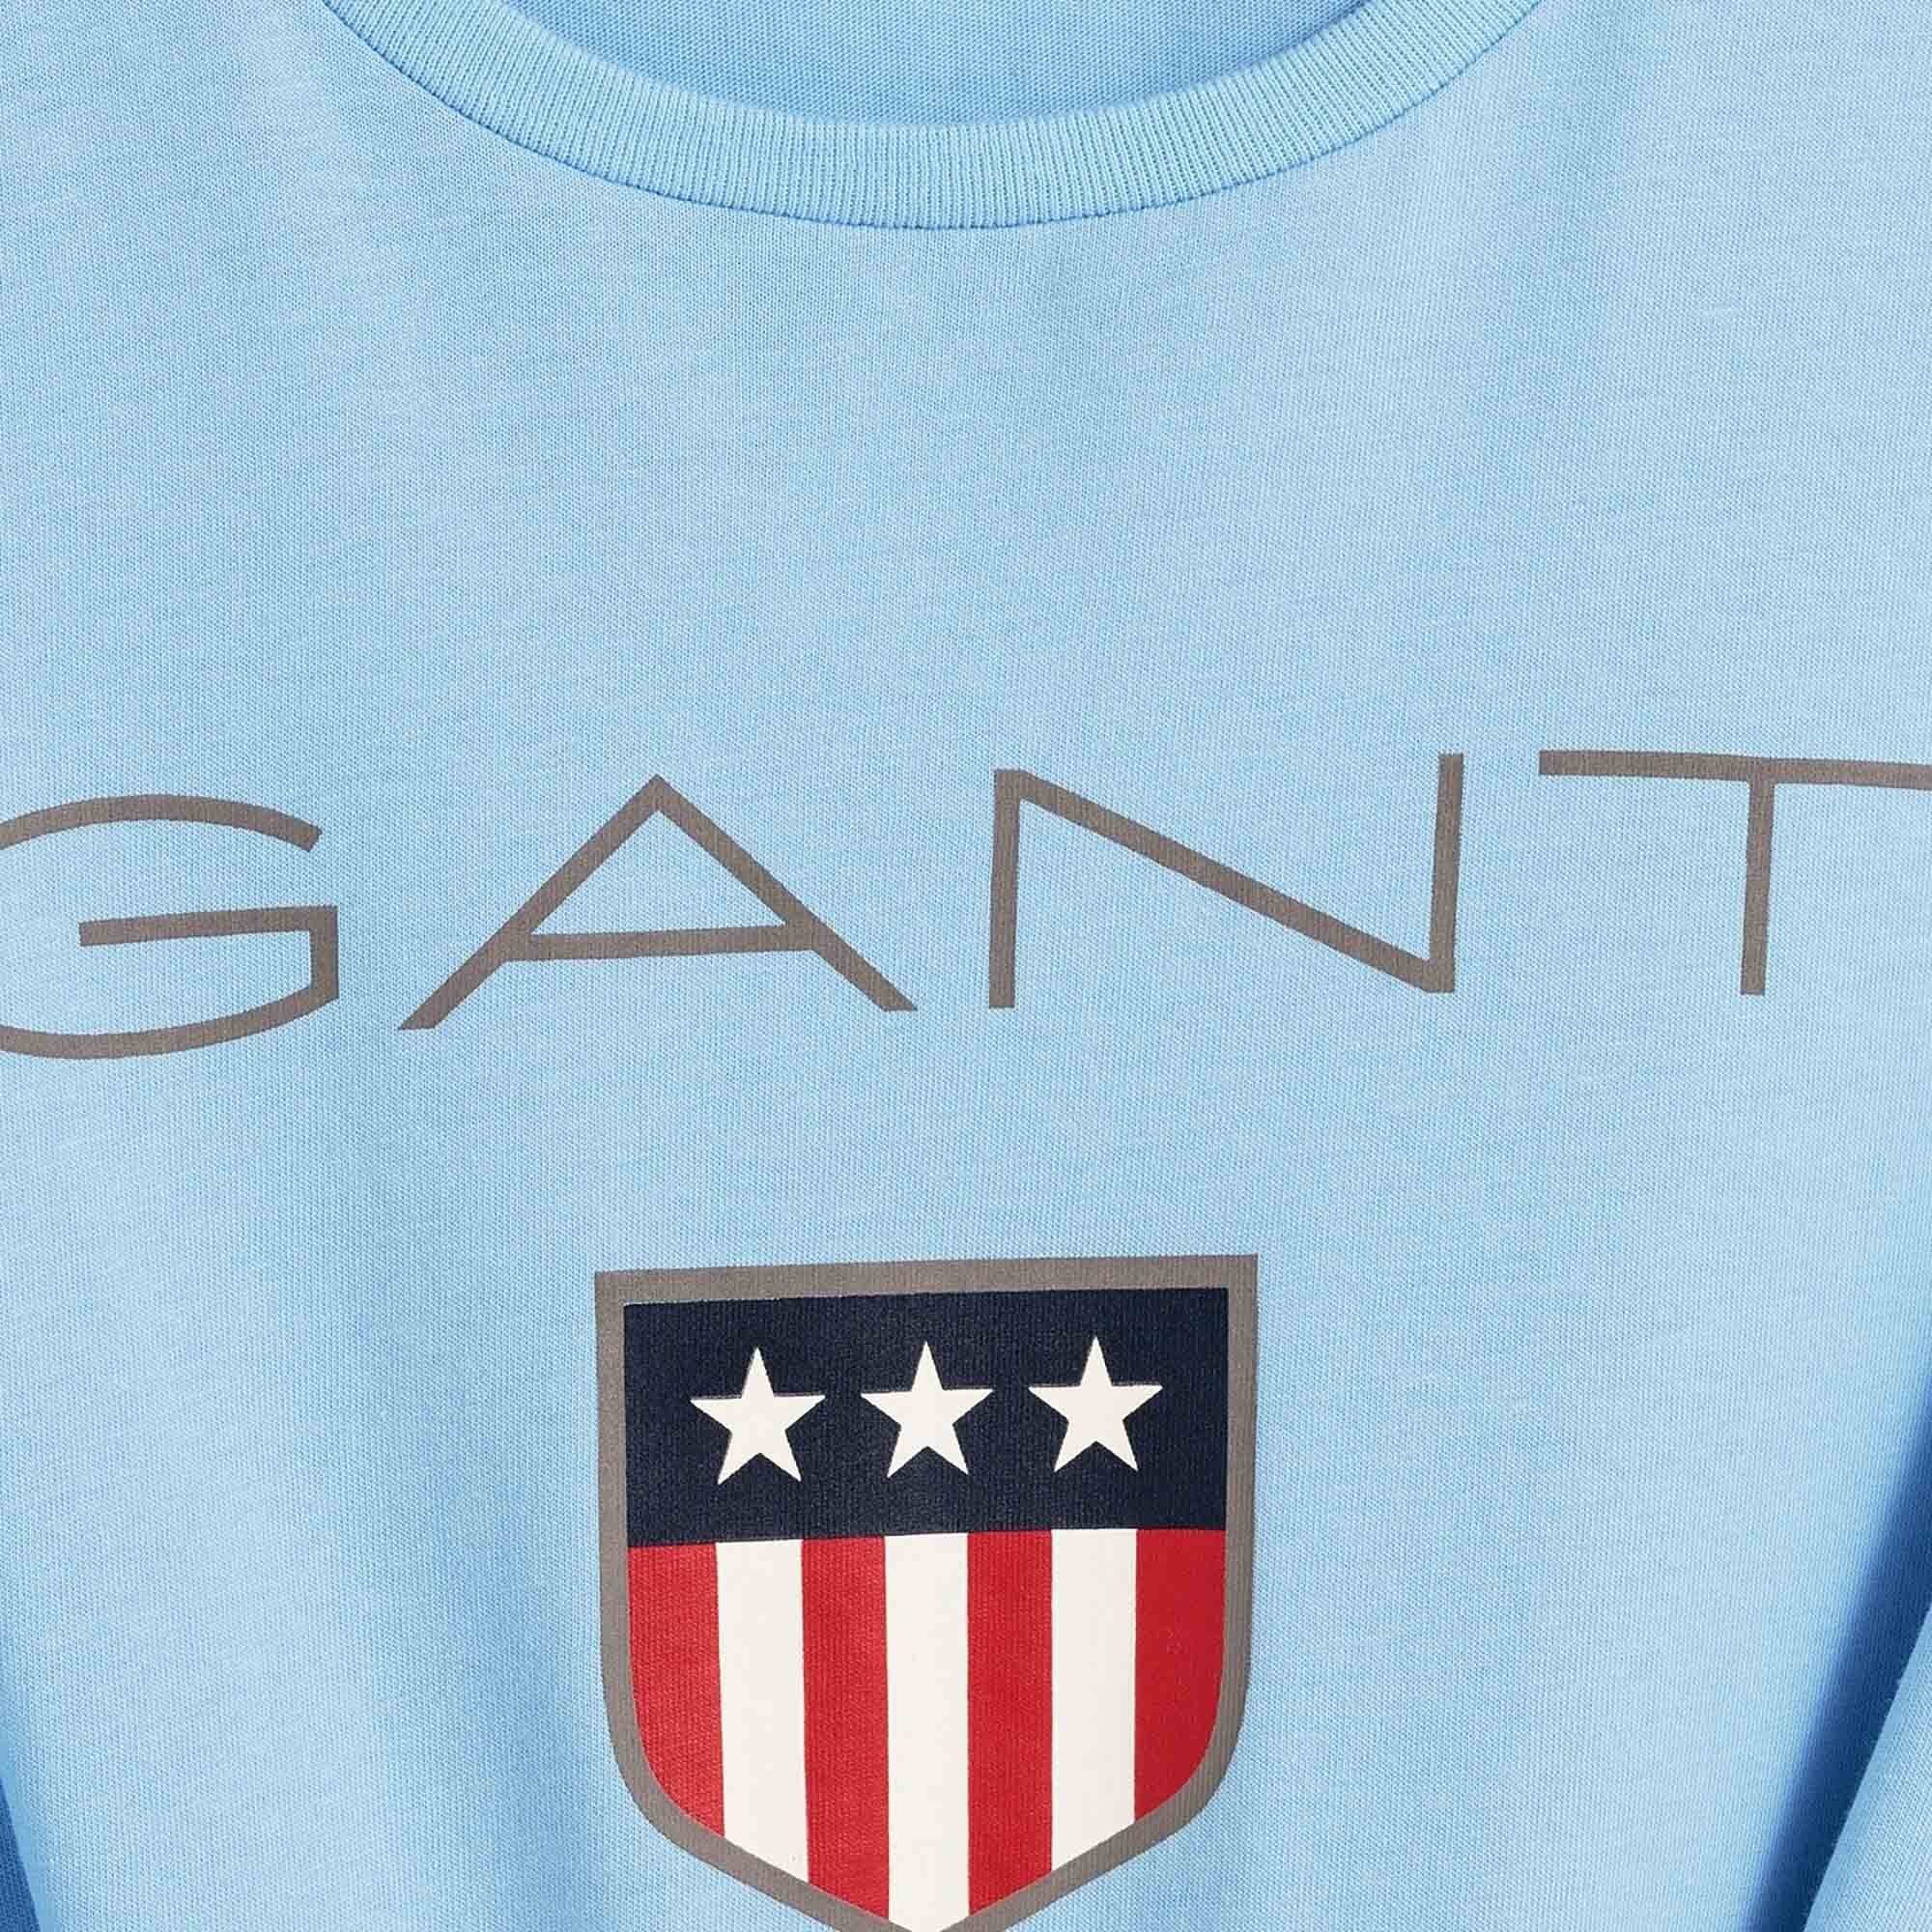 Gant T-Shirt Jungen - Logo, Boys SHIELD Blue) T-Shirt Teen Blau (Capri Kurzarm